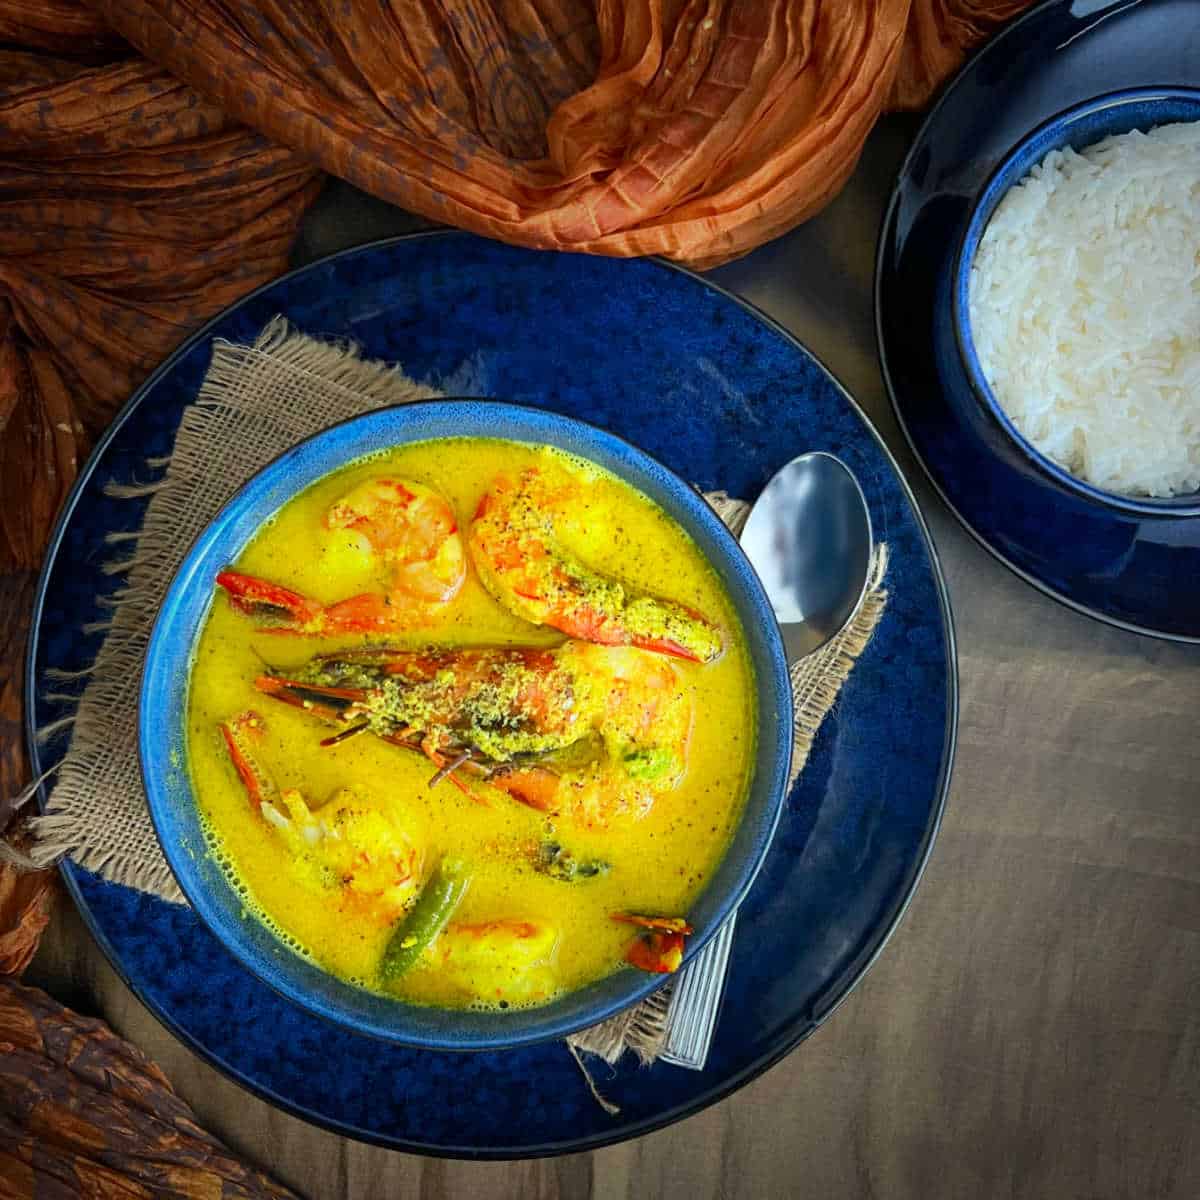 bhapa chingri or shrimp curry served with basmati rice.